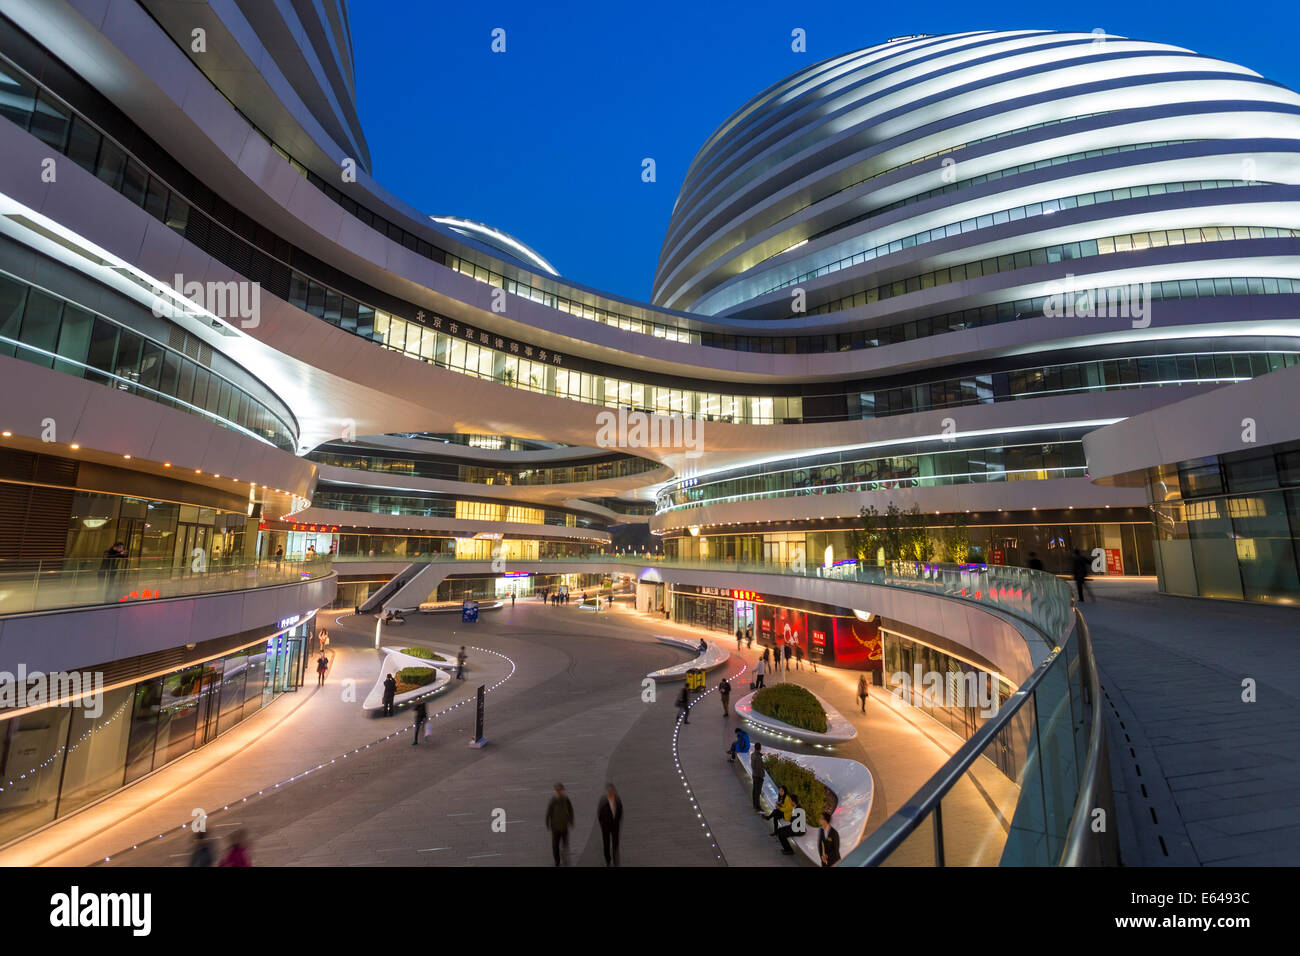 Der neue Galaxy Soho-Gebäude, entworfen von Architektin Zaha Hadid, Peking, China Stockfoto